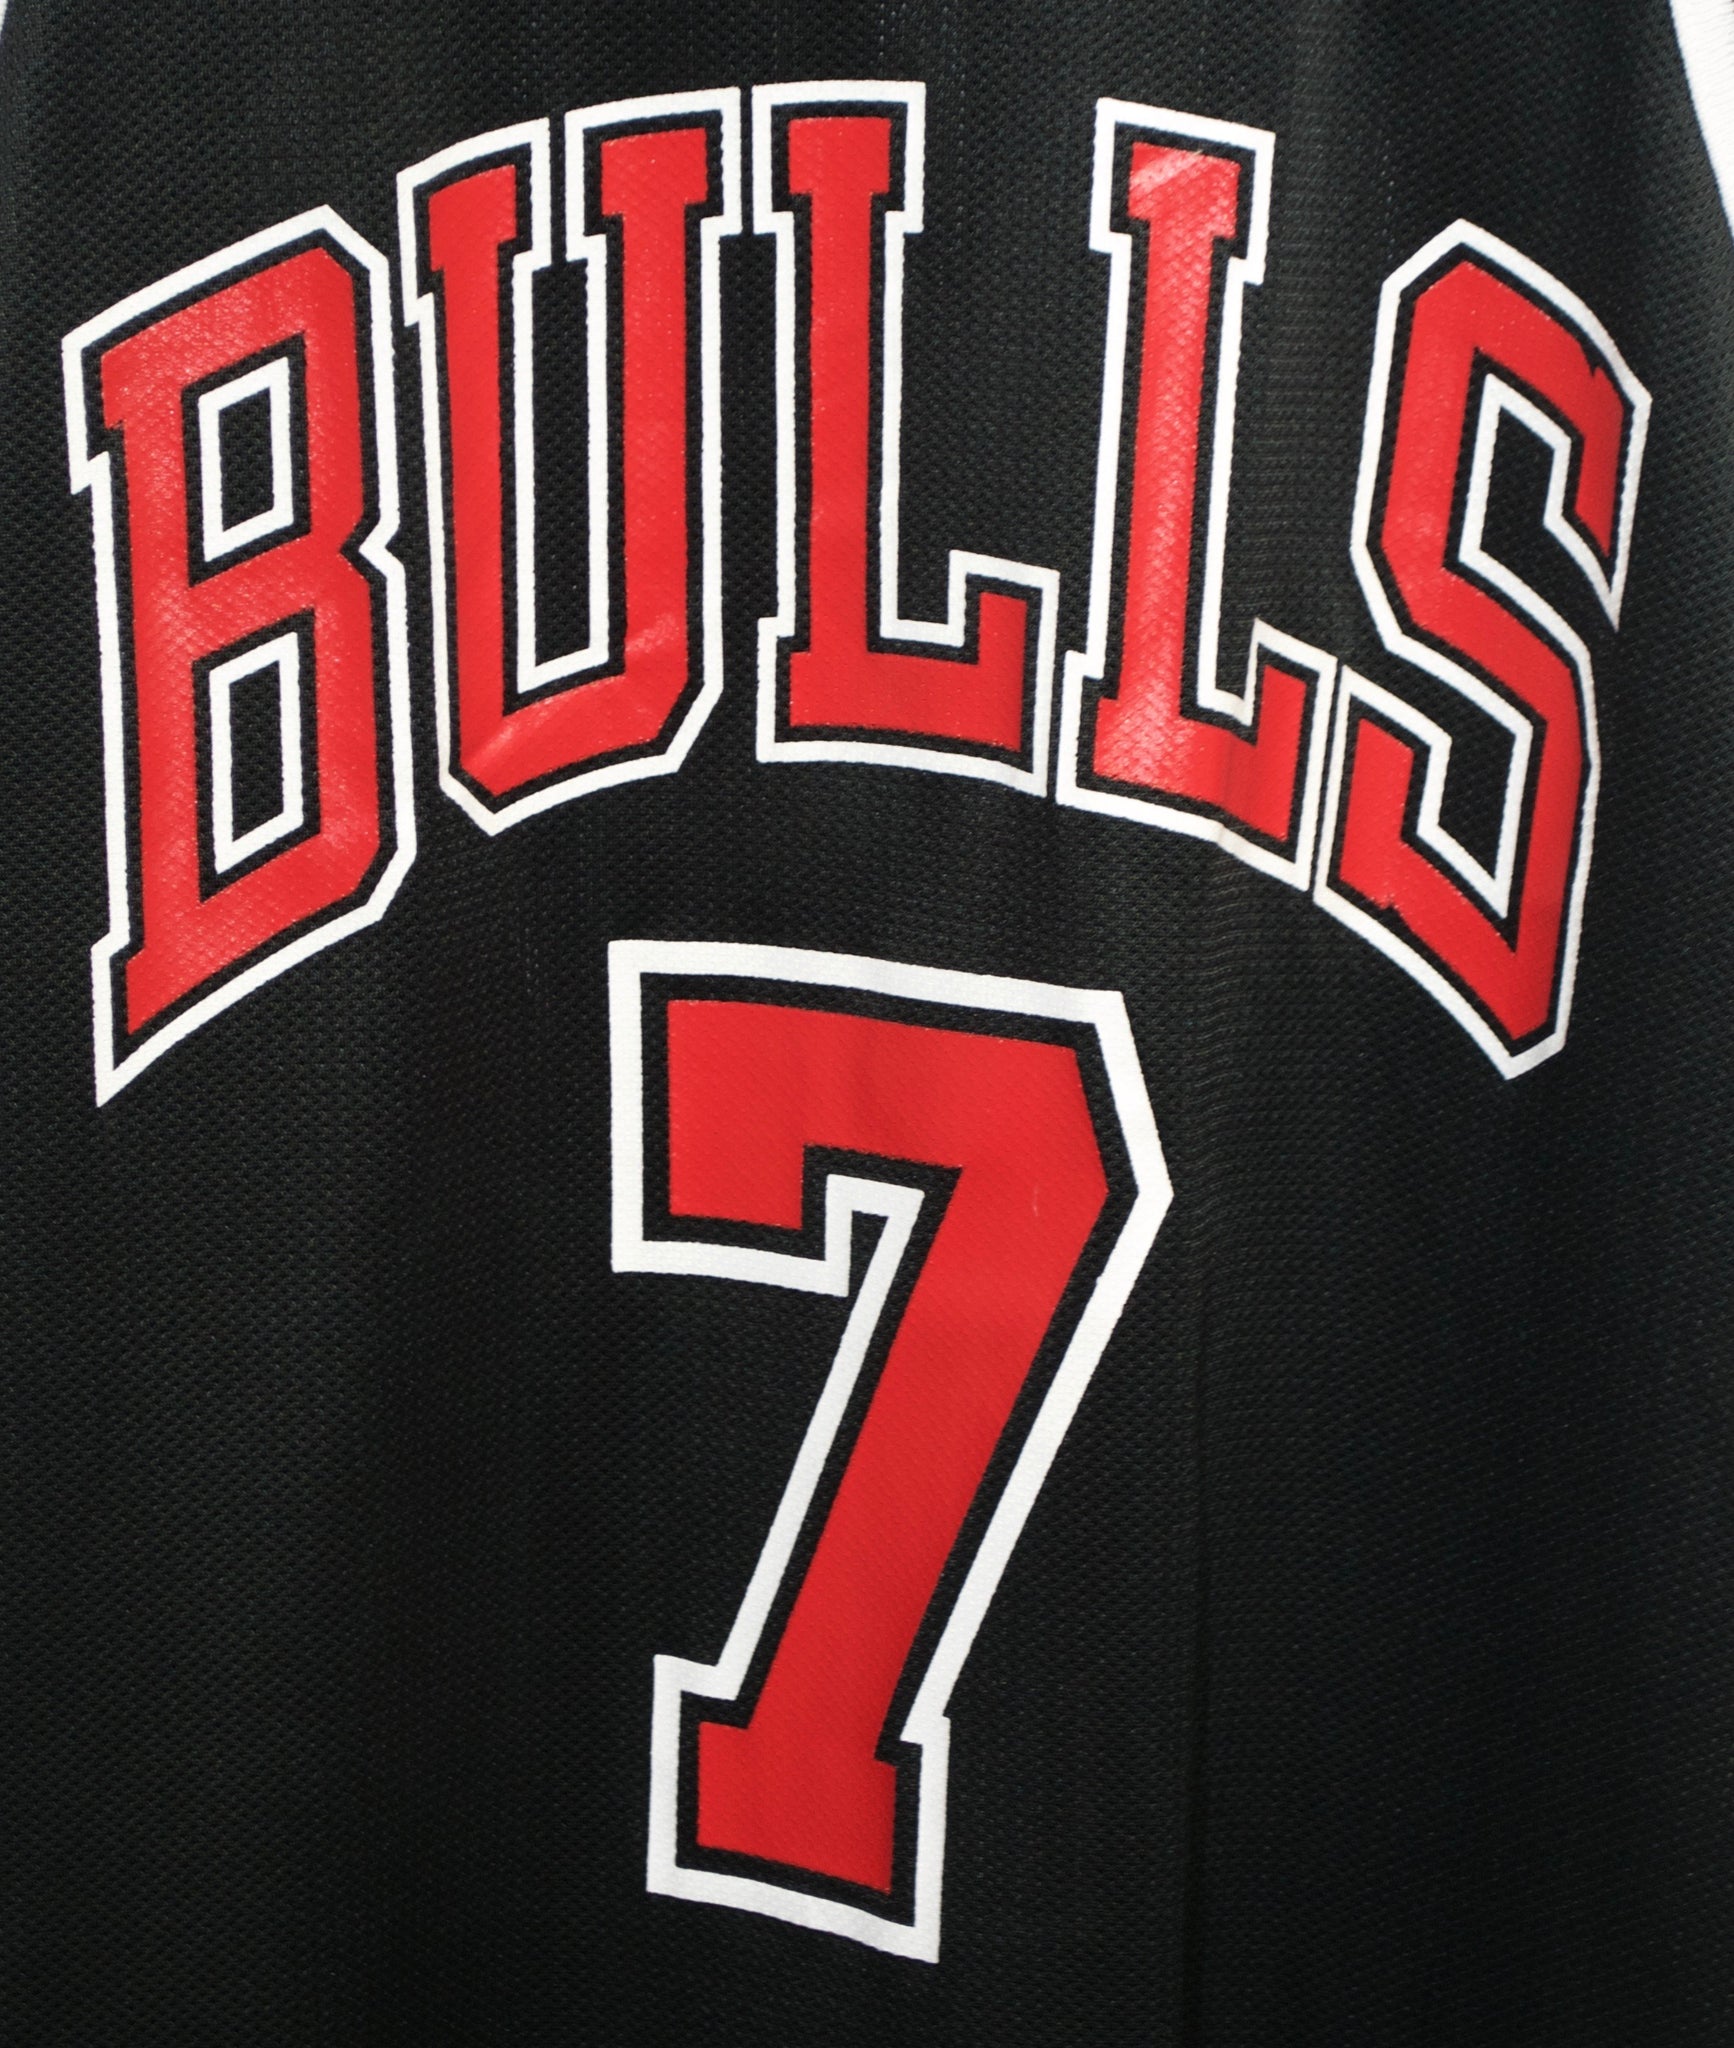 bulls 7 jersey